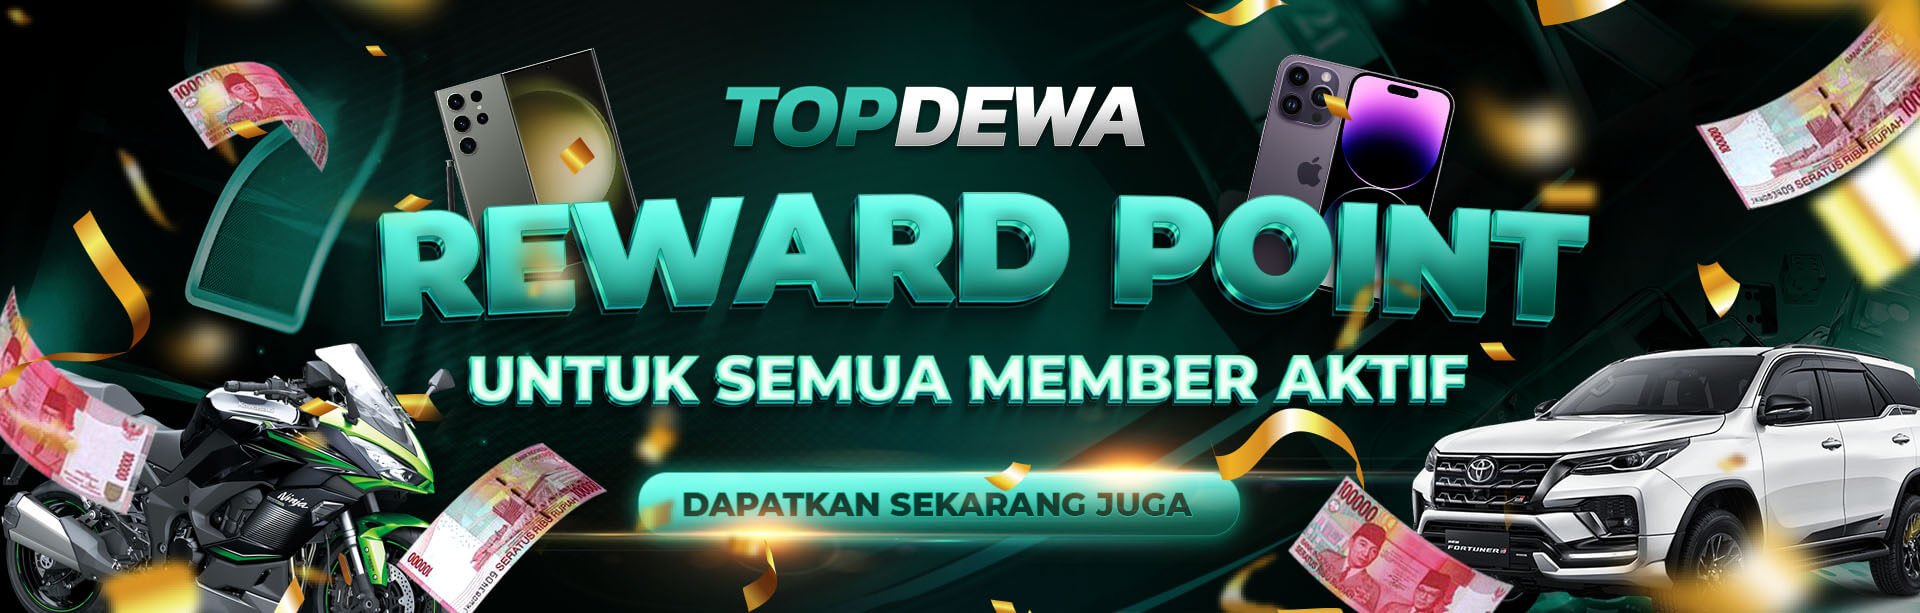 REWARD POINT TOPDEWA